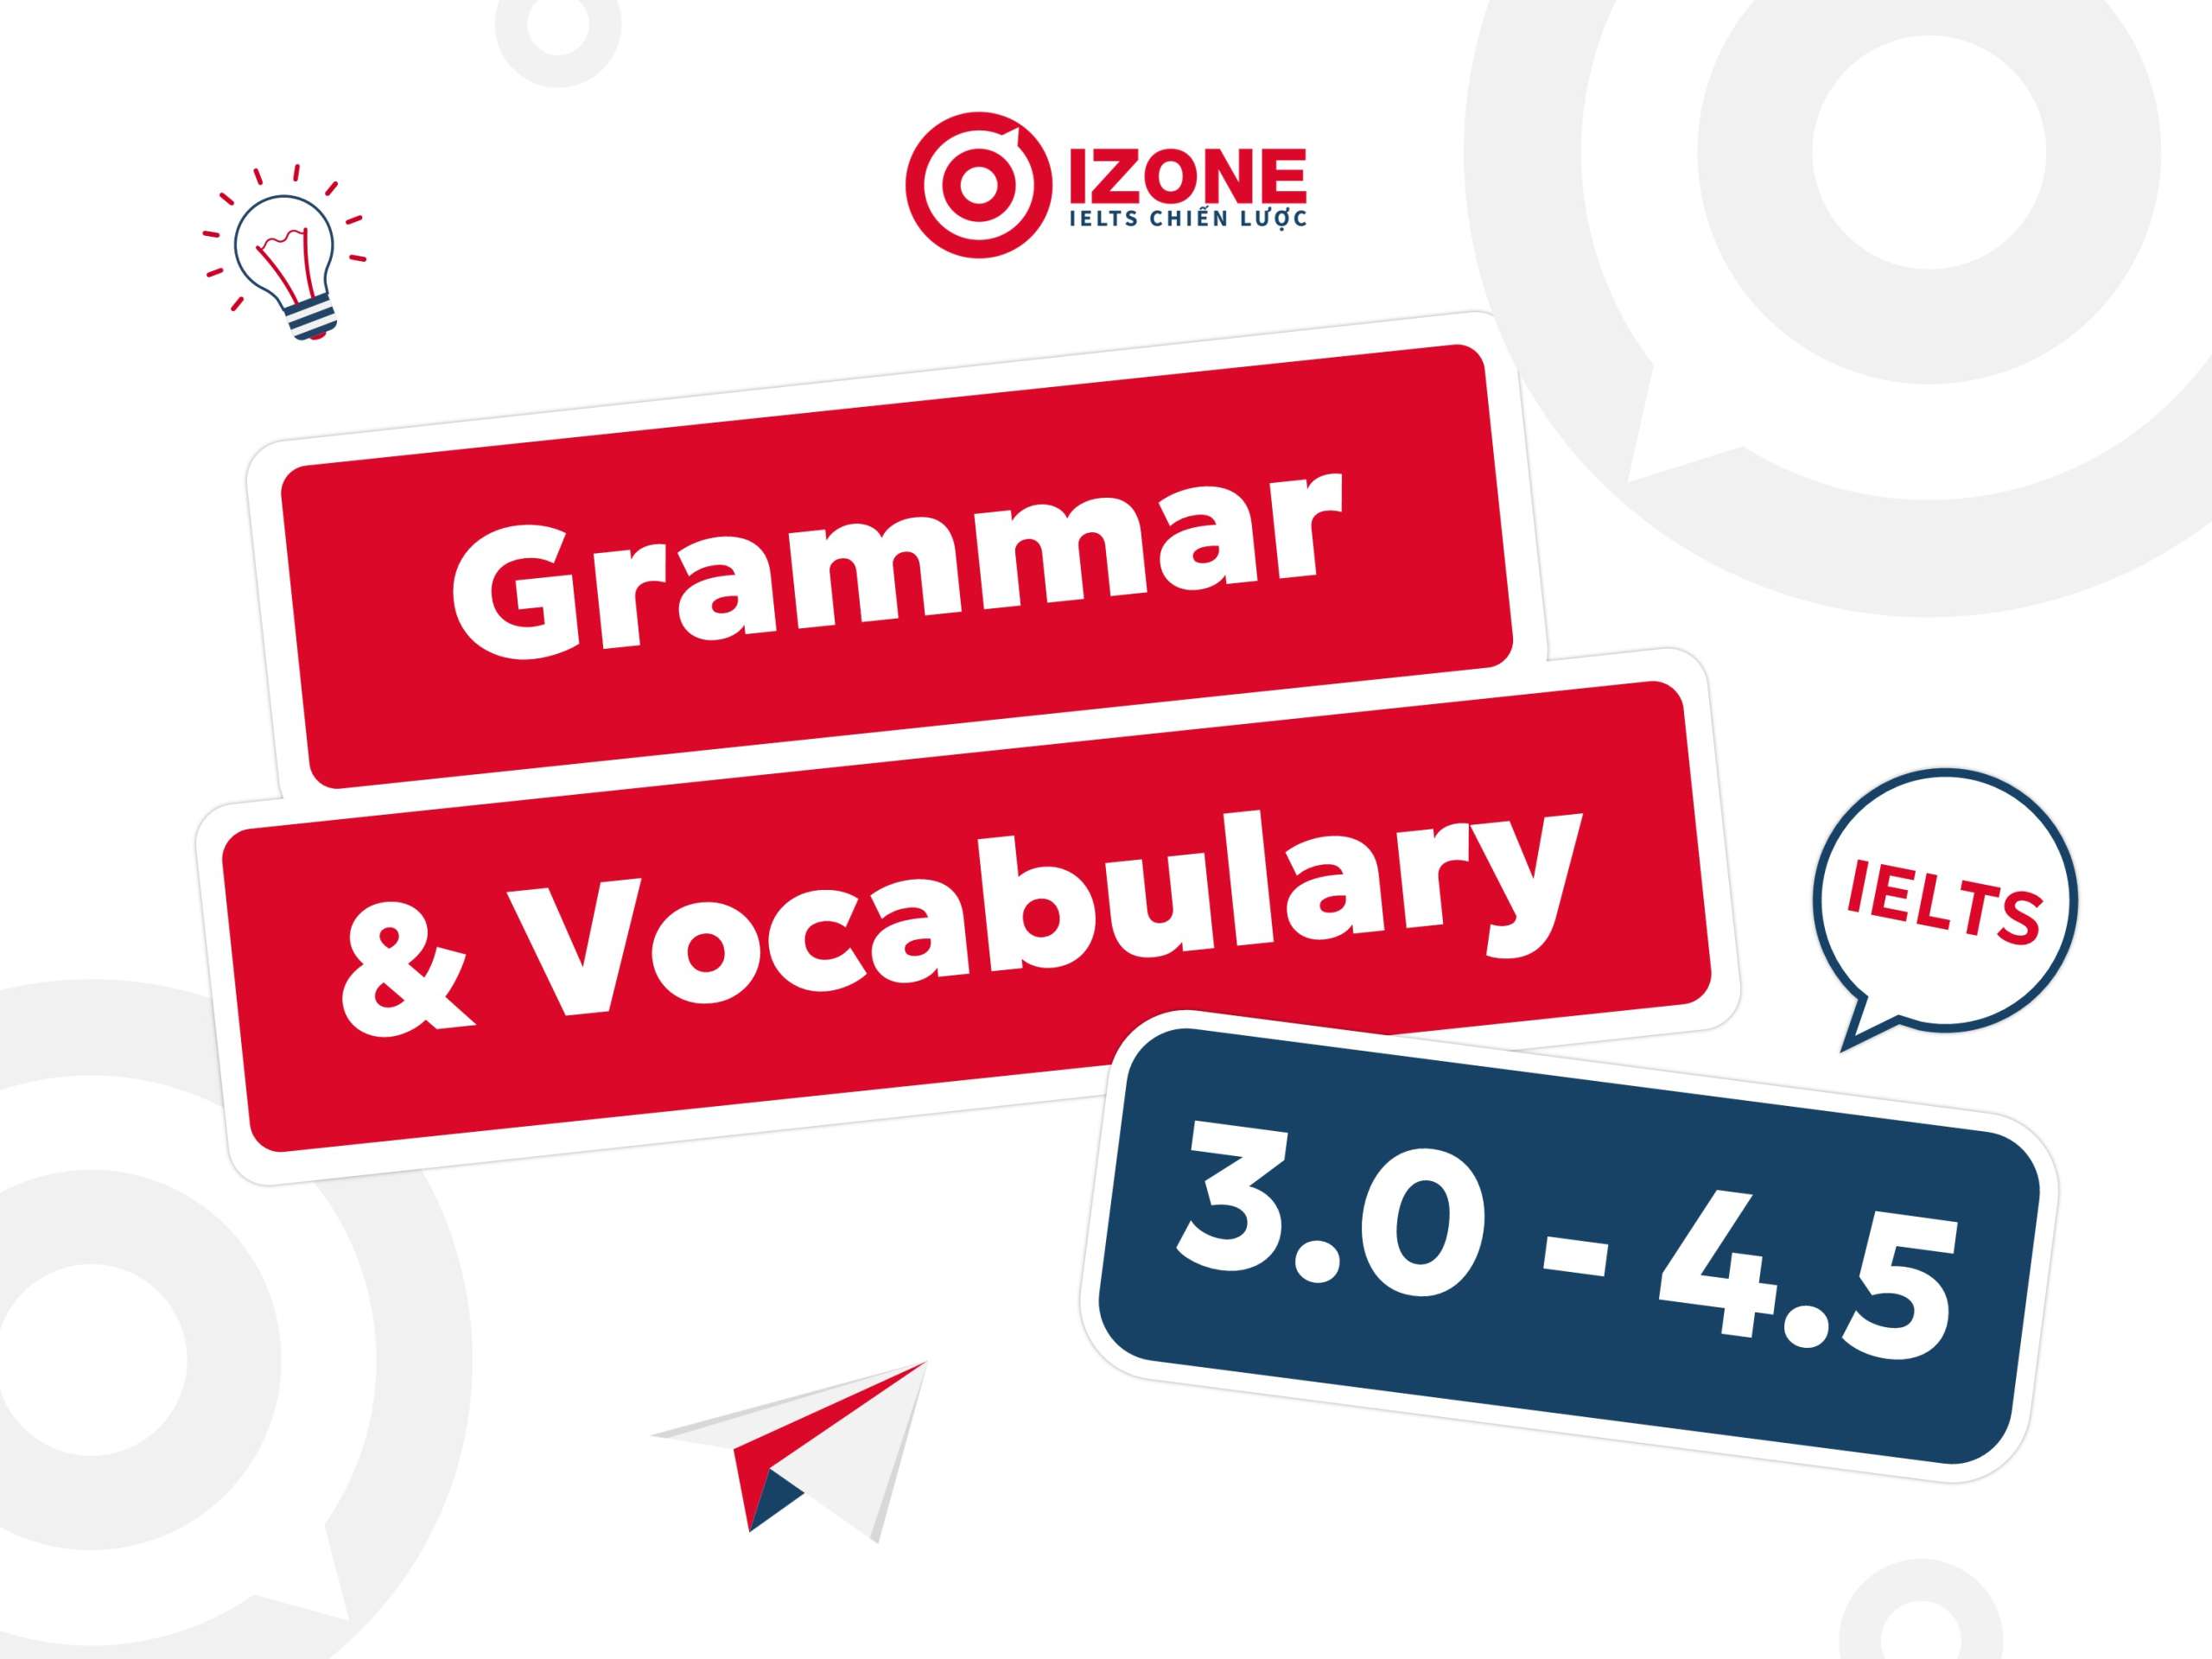 Grammar & Vocabulary 3.0 - 4.5